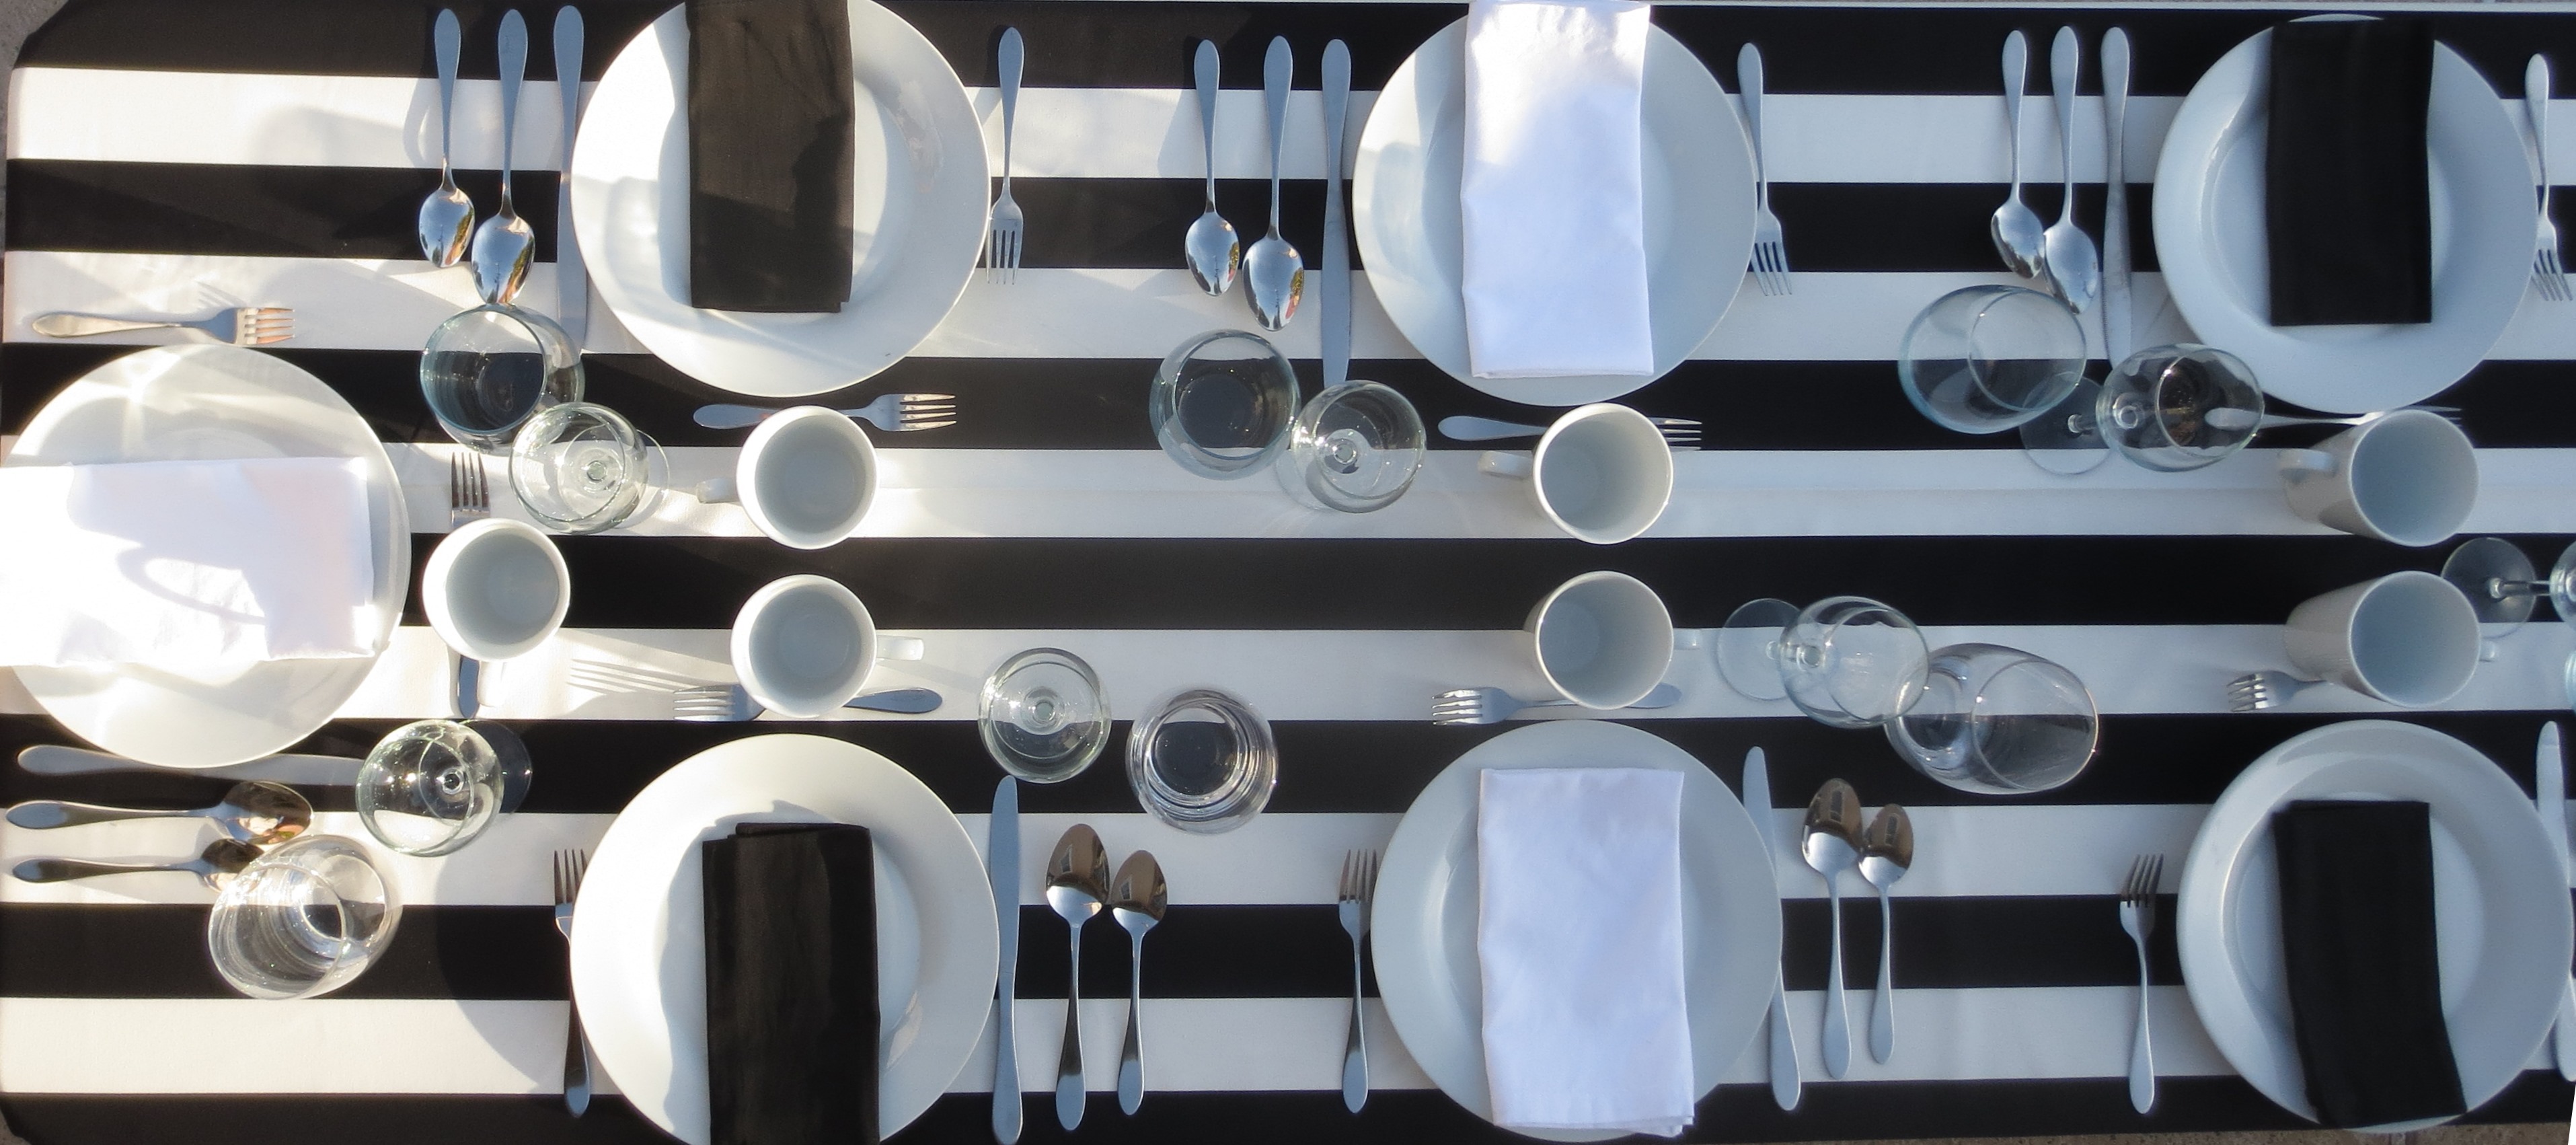 dewitt kendall dinnerware product development expert New York tabletop housewares sourcing tabletimes blog